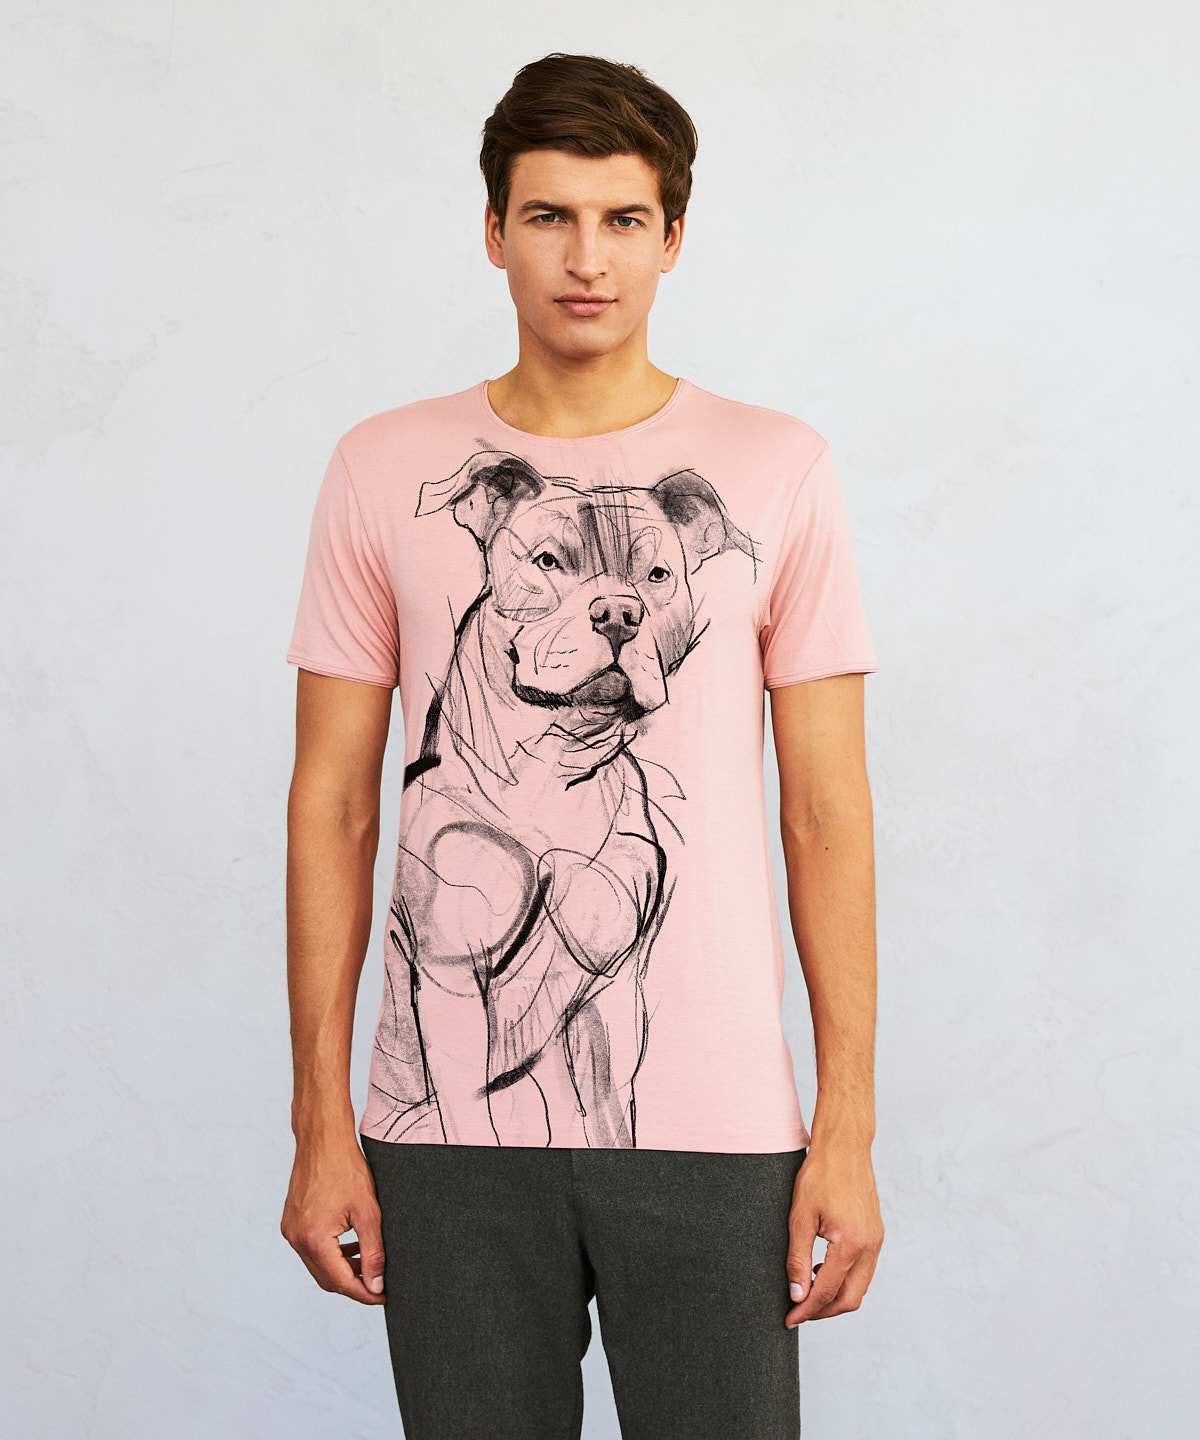 Staffordshire Bull Terrier light pink t-shirt MAN